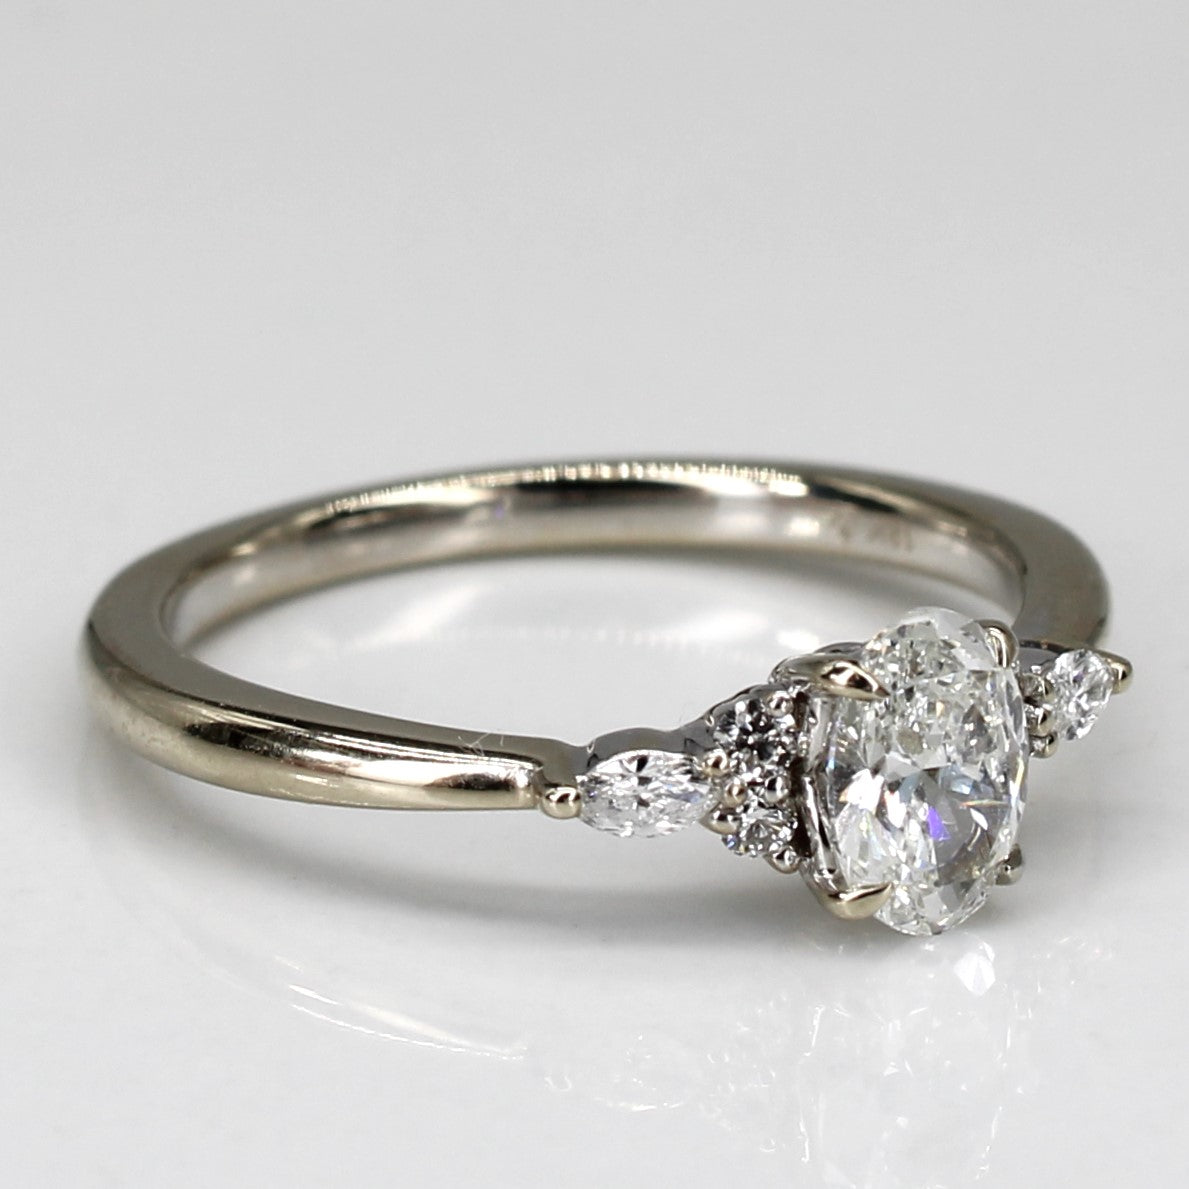 Oval Diamond Solitaire with Accent Diamonds 18k Ring | 0.5ctw, 0.06ctw, 0.04ctw | SZ 6 3/4 |